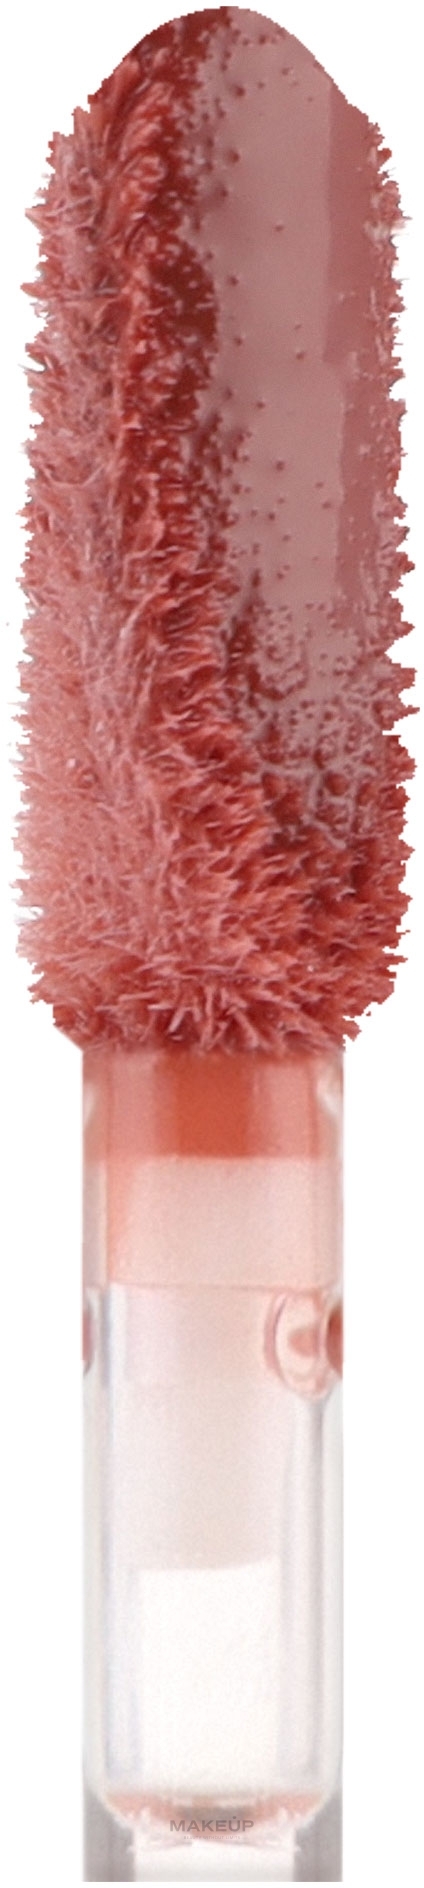 Блеск для губ - Sheglam Glaze Daze Lip Gloss — фото Apple Spice